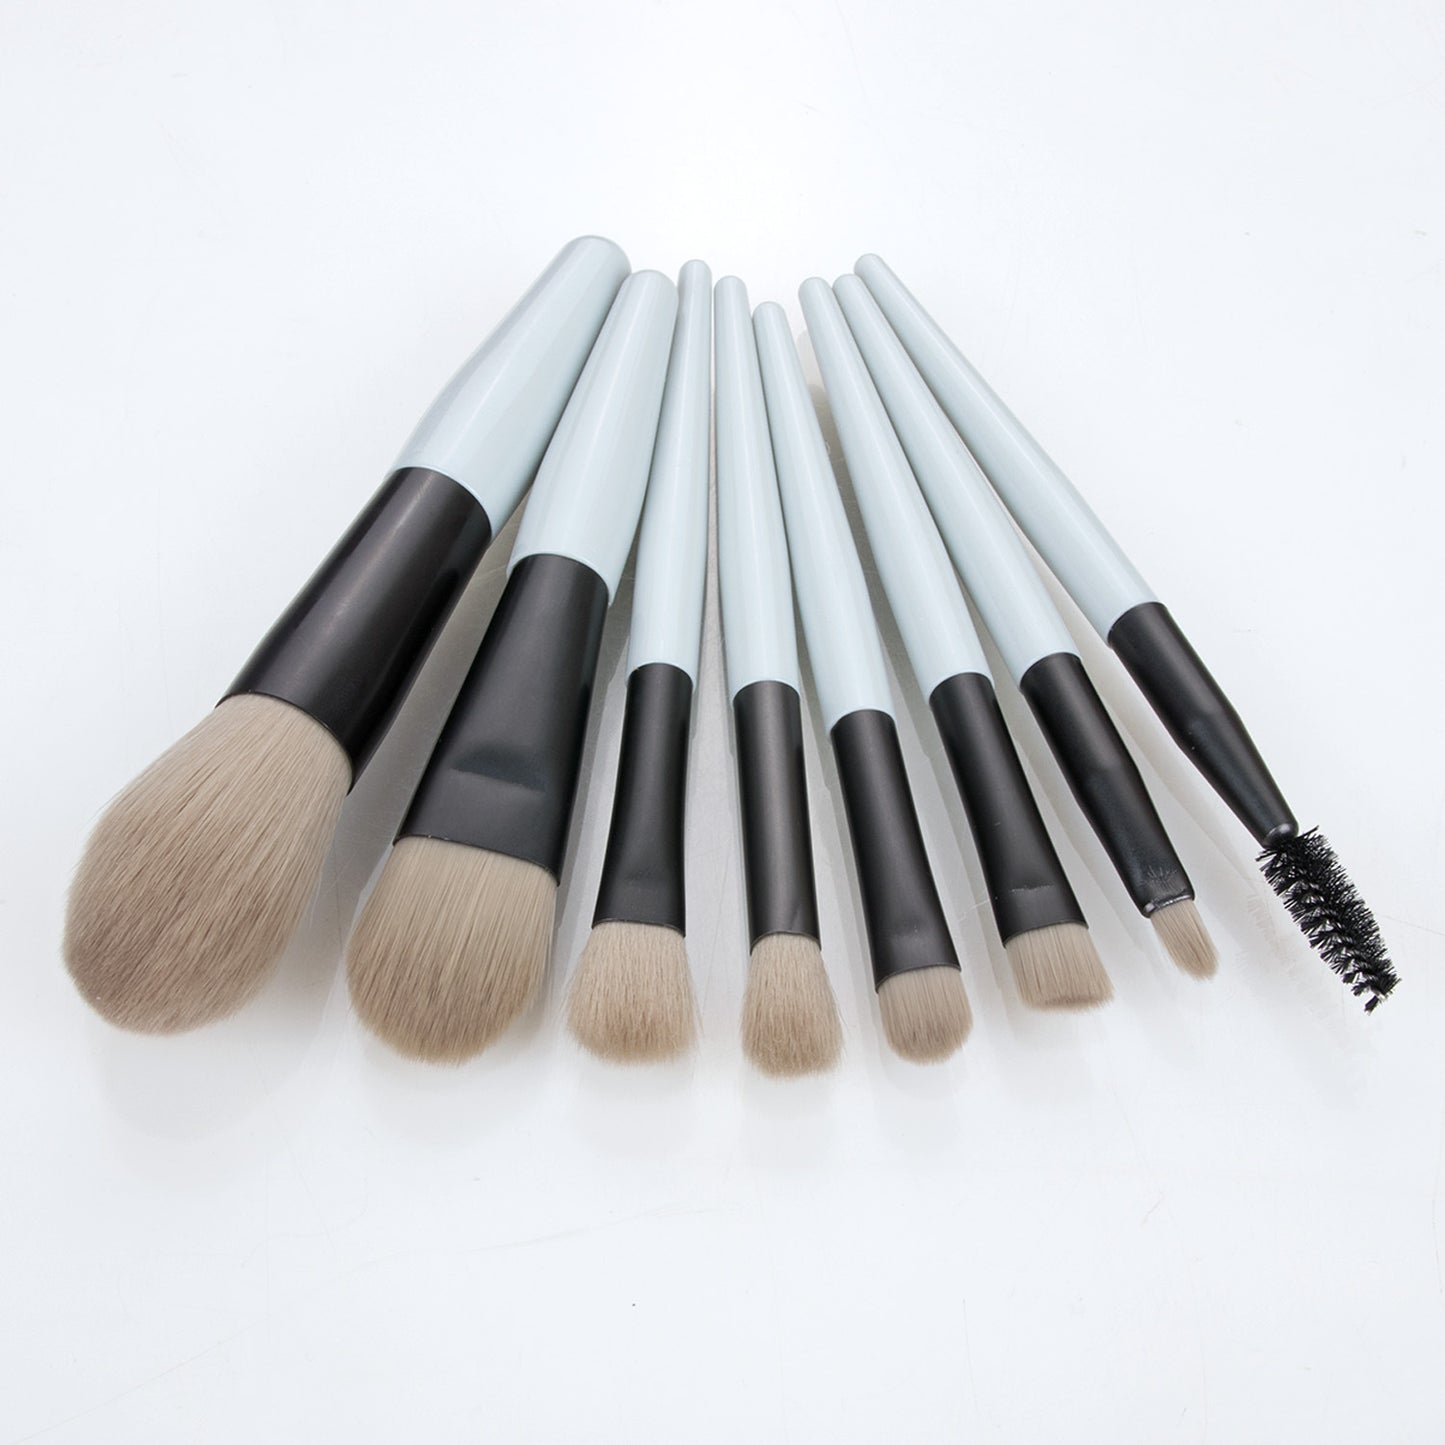 Nongying 8 mini Morandi color makeup brush sets, soft bristles, plastic handle, portable beauty tools in stock